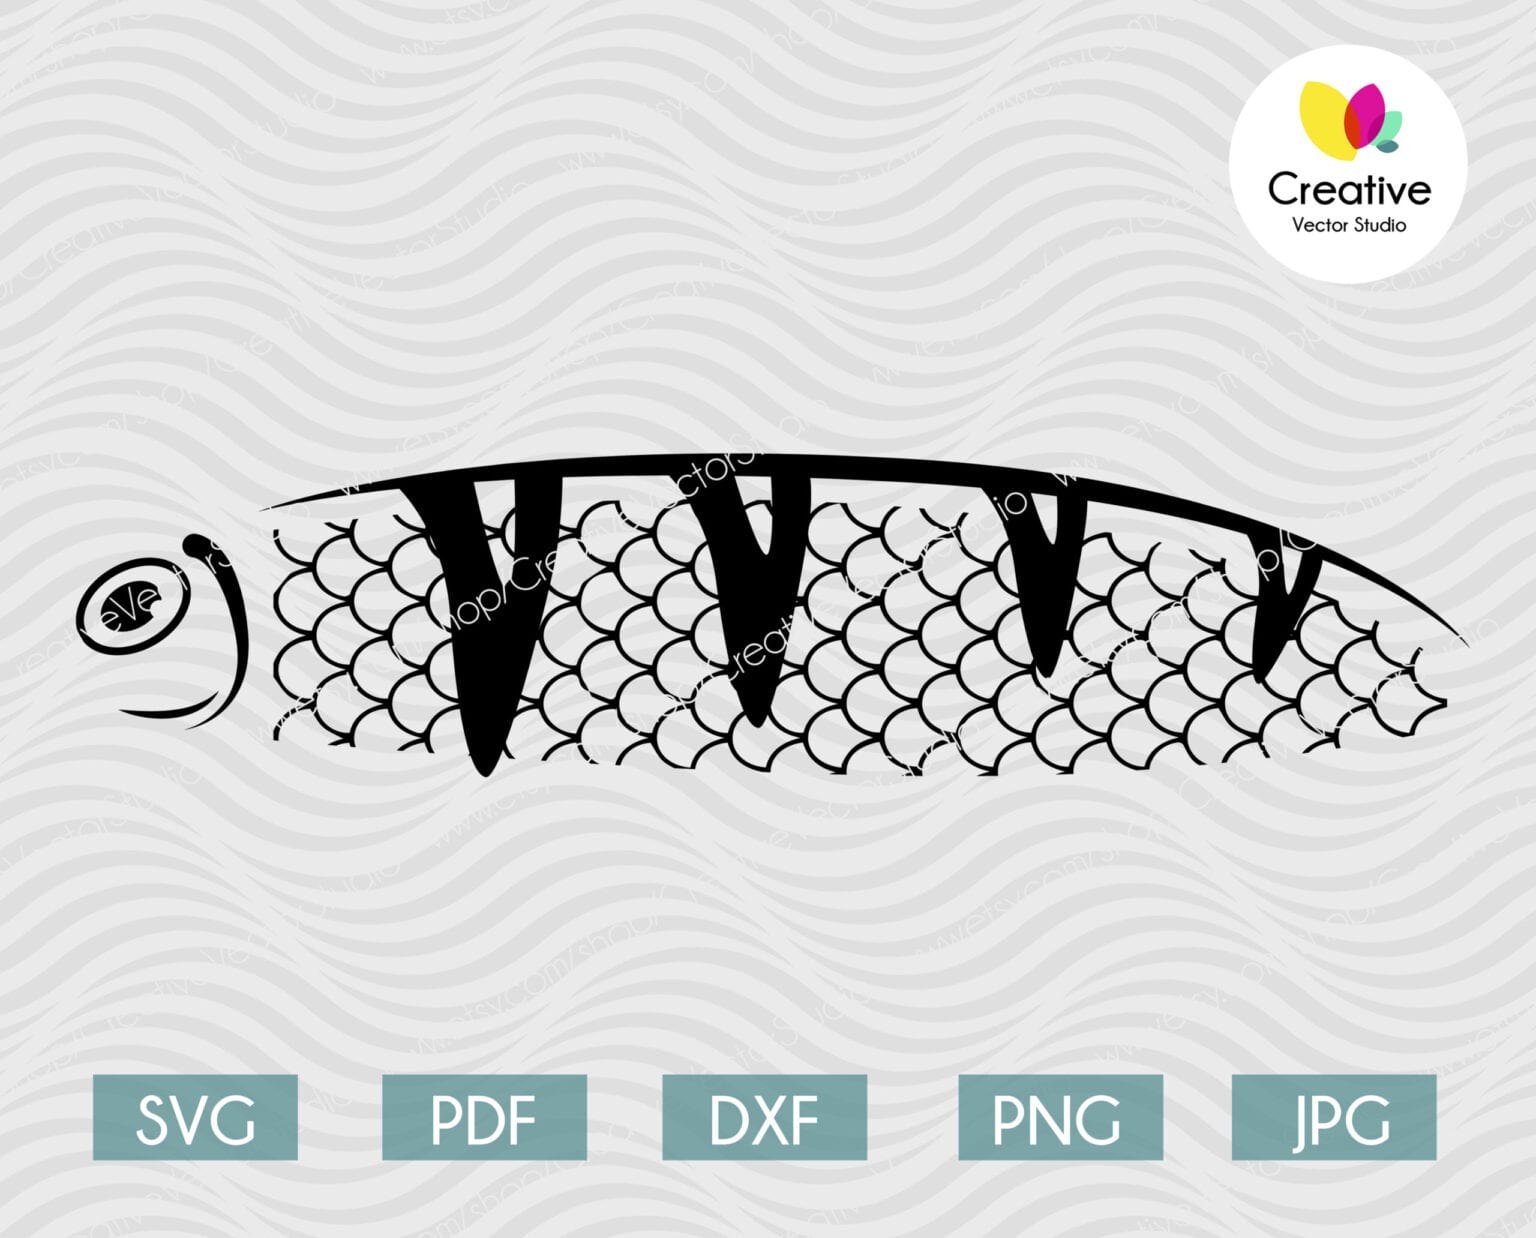 Download Fishing Lure SVG #35 Cut File Image | Creative Vector Studio